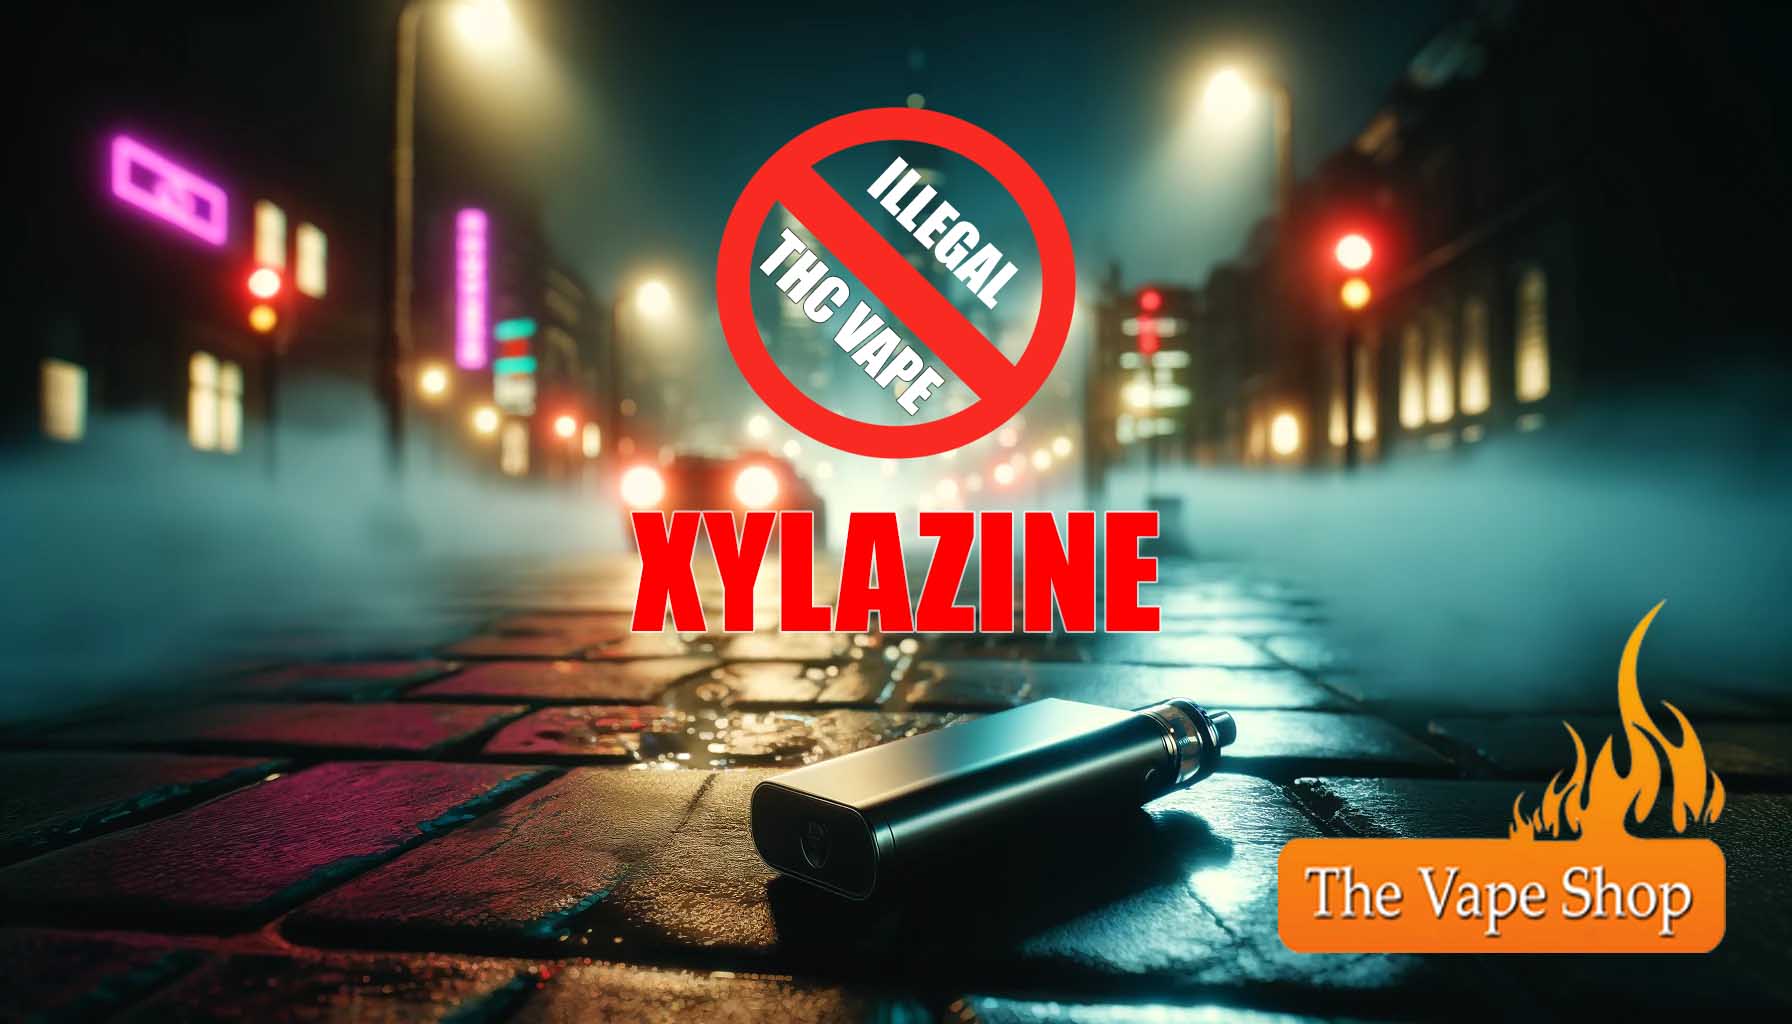 Alarming Discovery: Hazardous Xylazine Detected in UK Cannabis Vapes